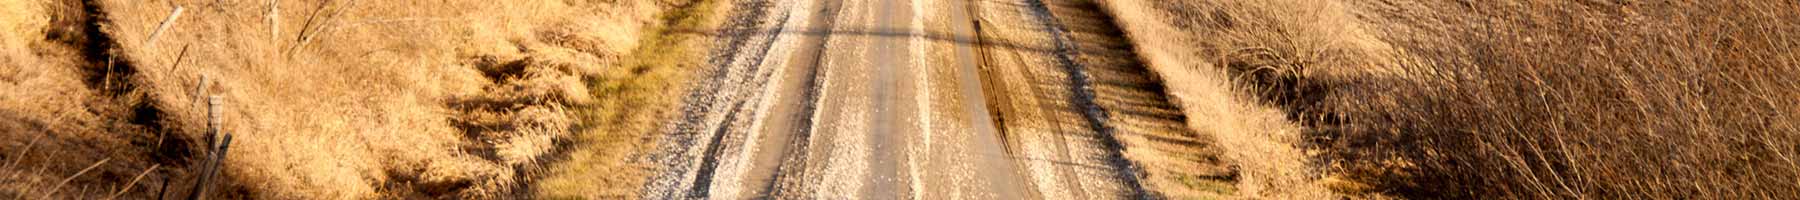 photo of a dirt road through brown fields, Iowa, January 2012, Tony Fischer